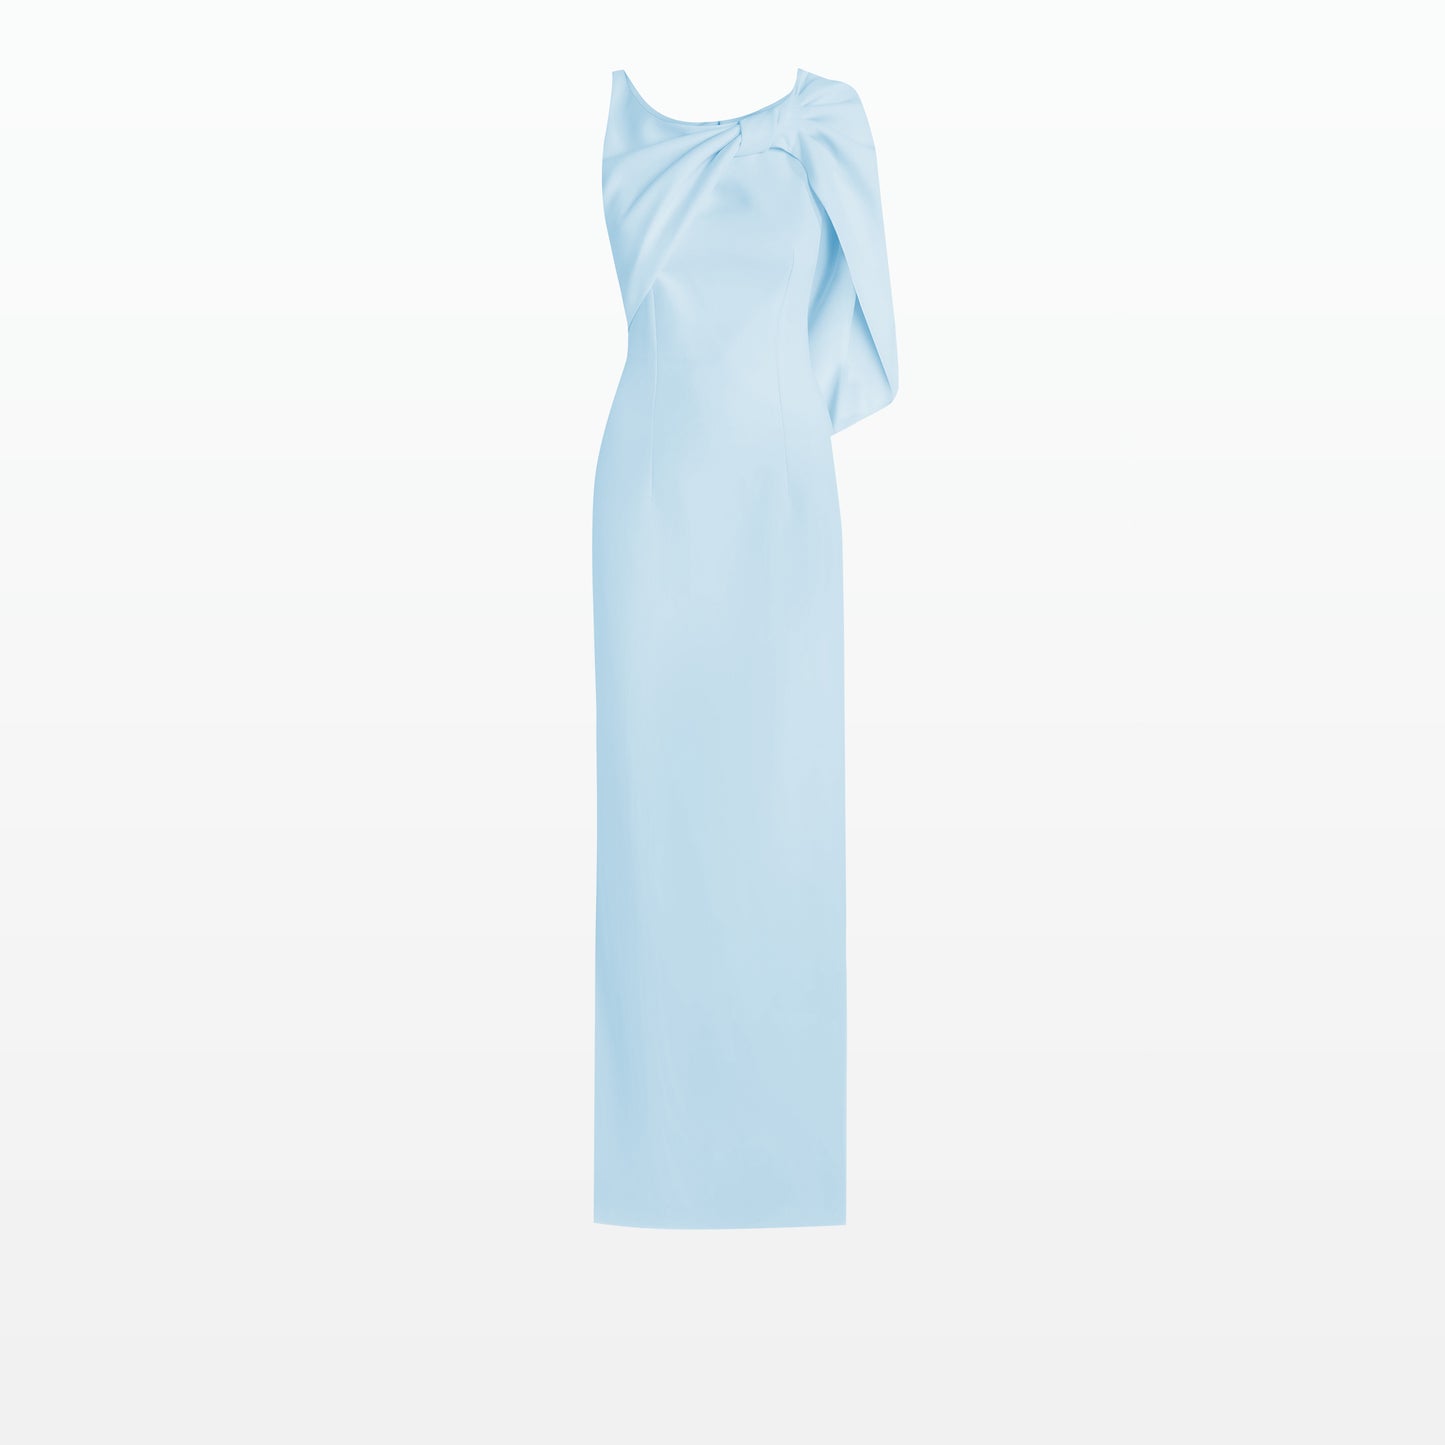 Serendipity Pale Blue Long Dress